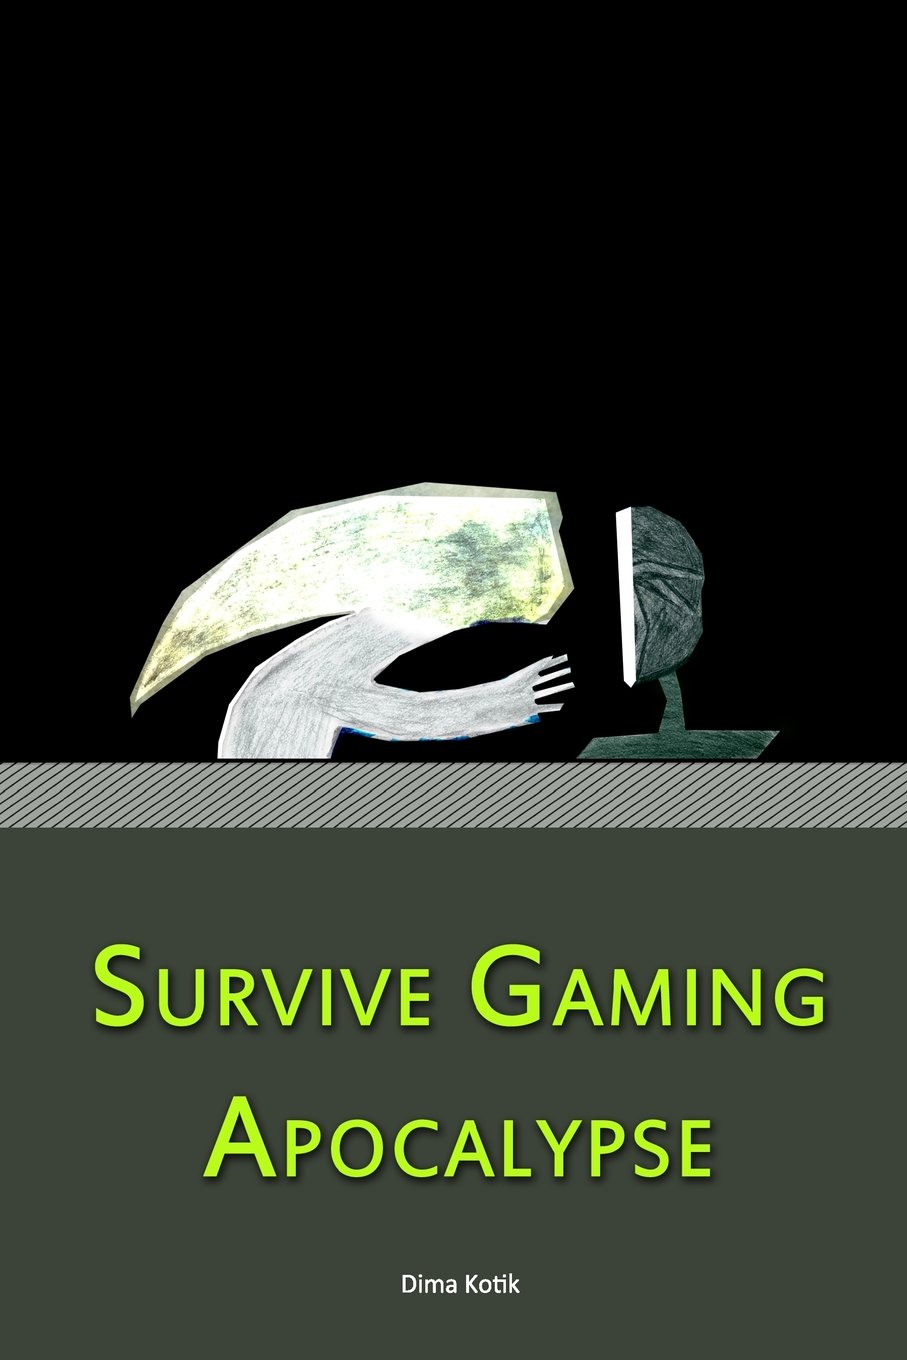 Survive the Gaming Apocalypse